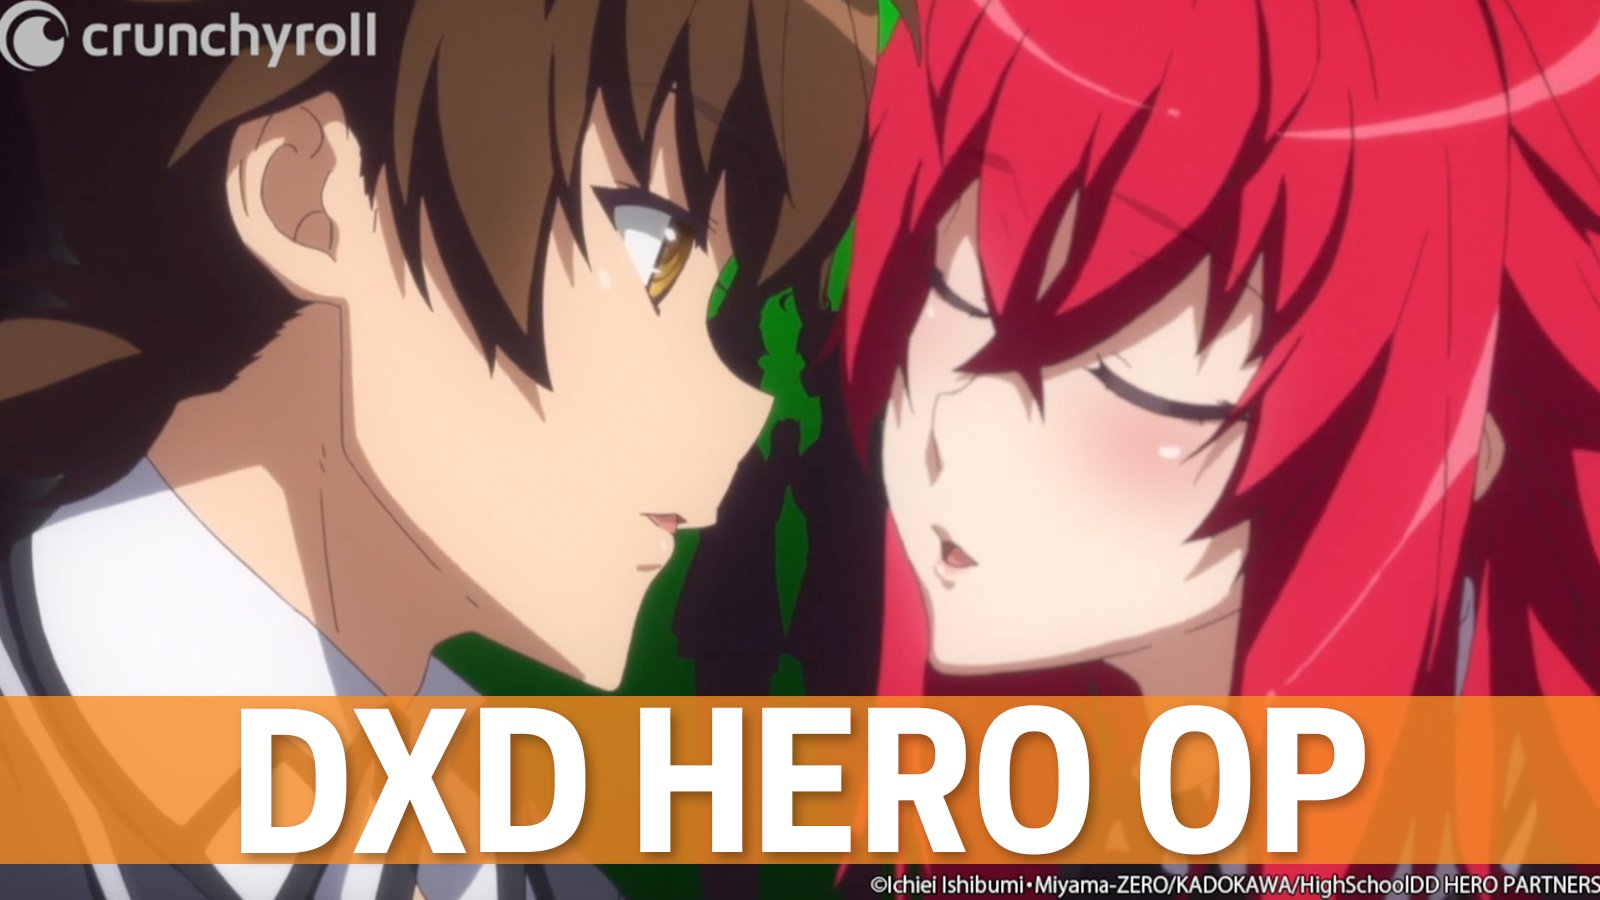 High School DxD Hero - Opening